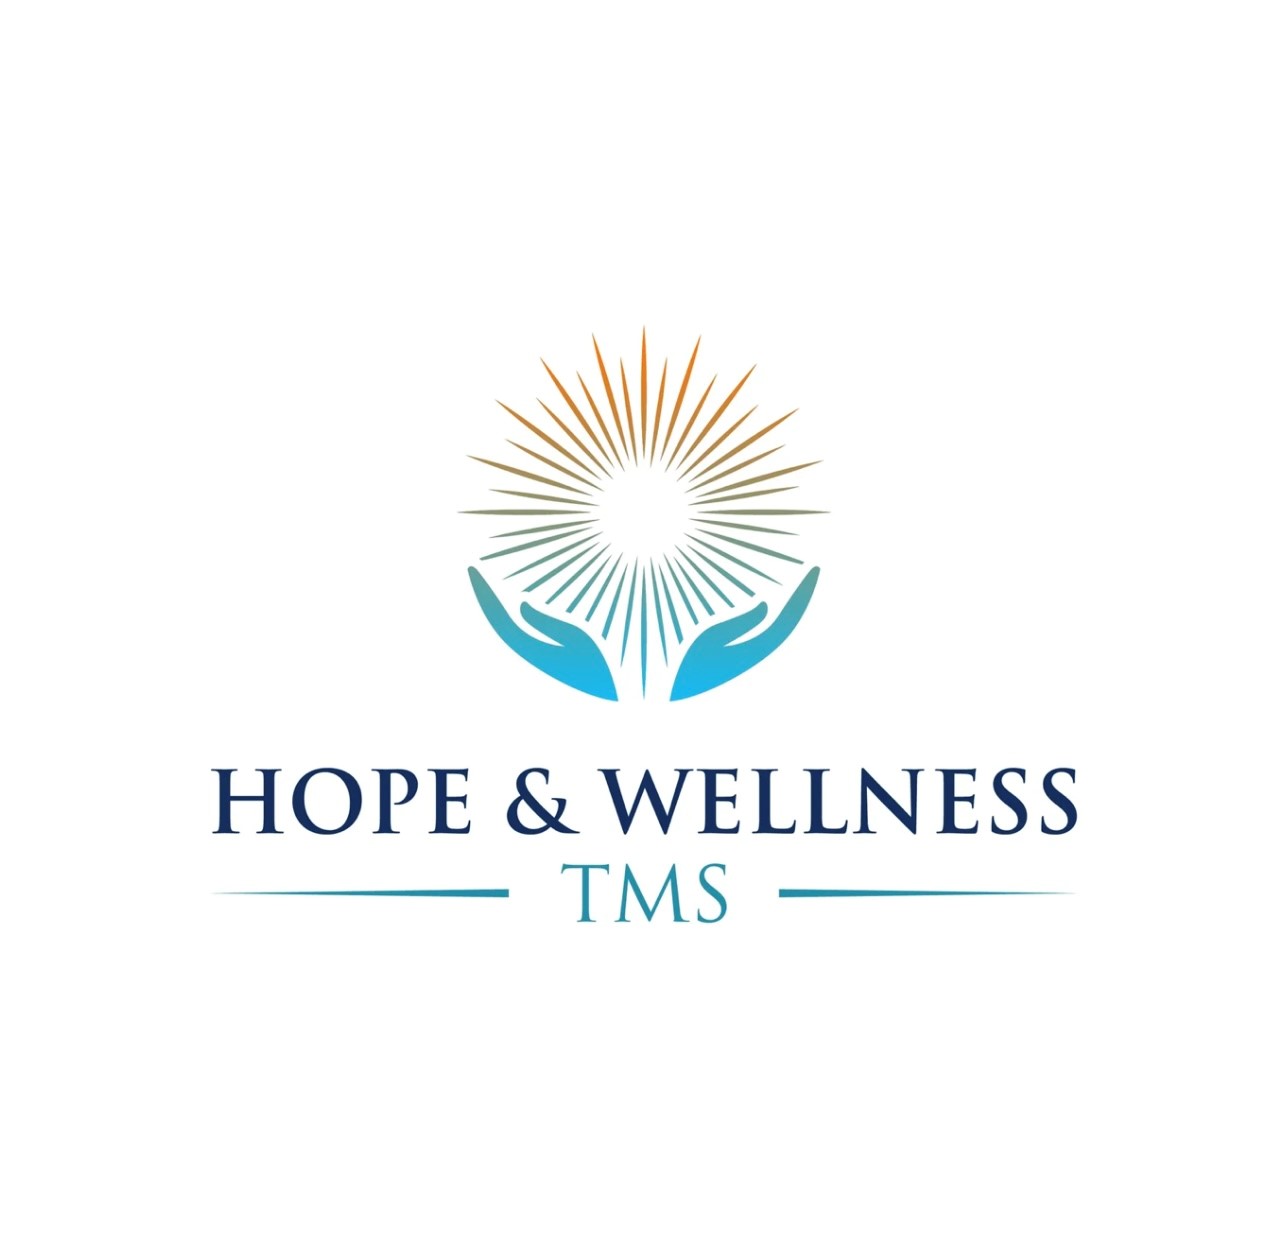 Hope & Wellness TMS logo